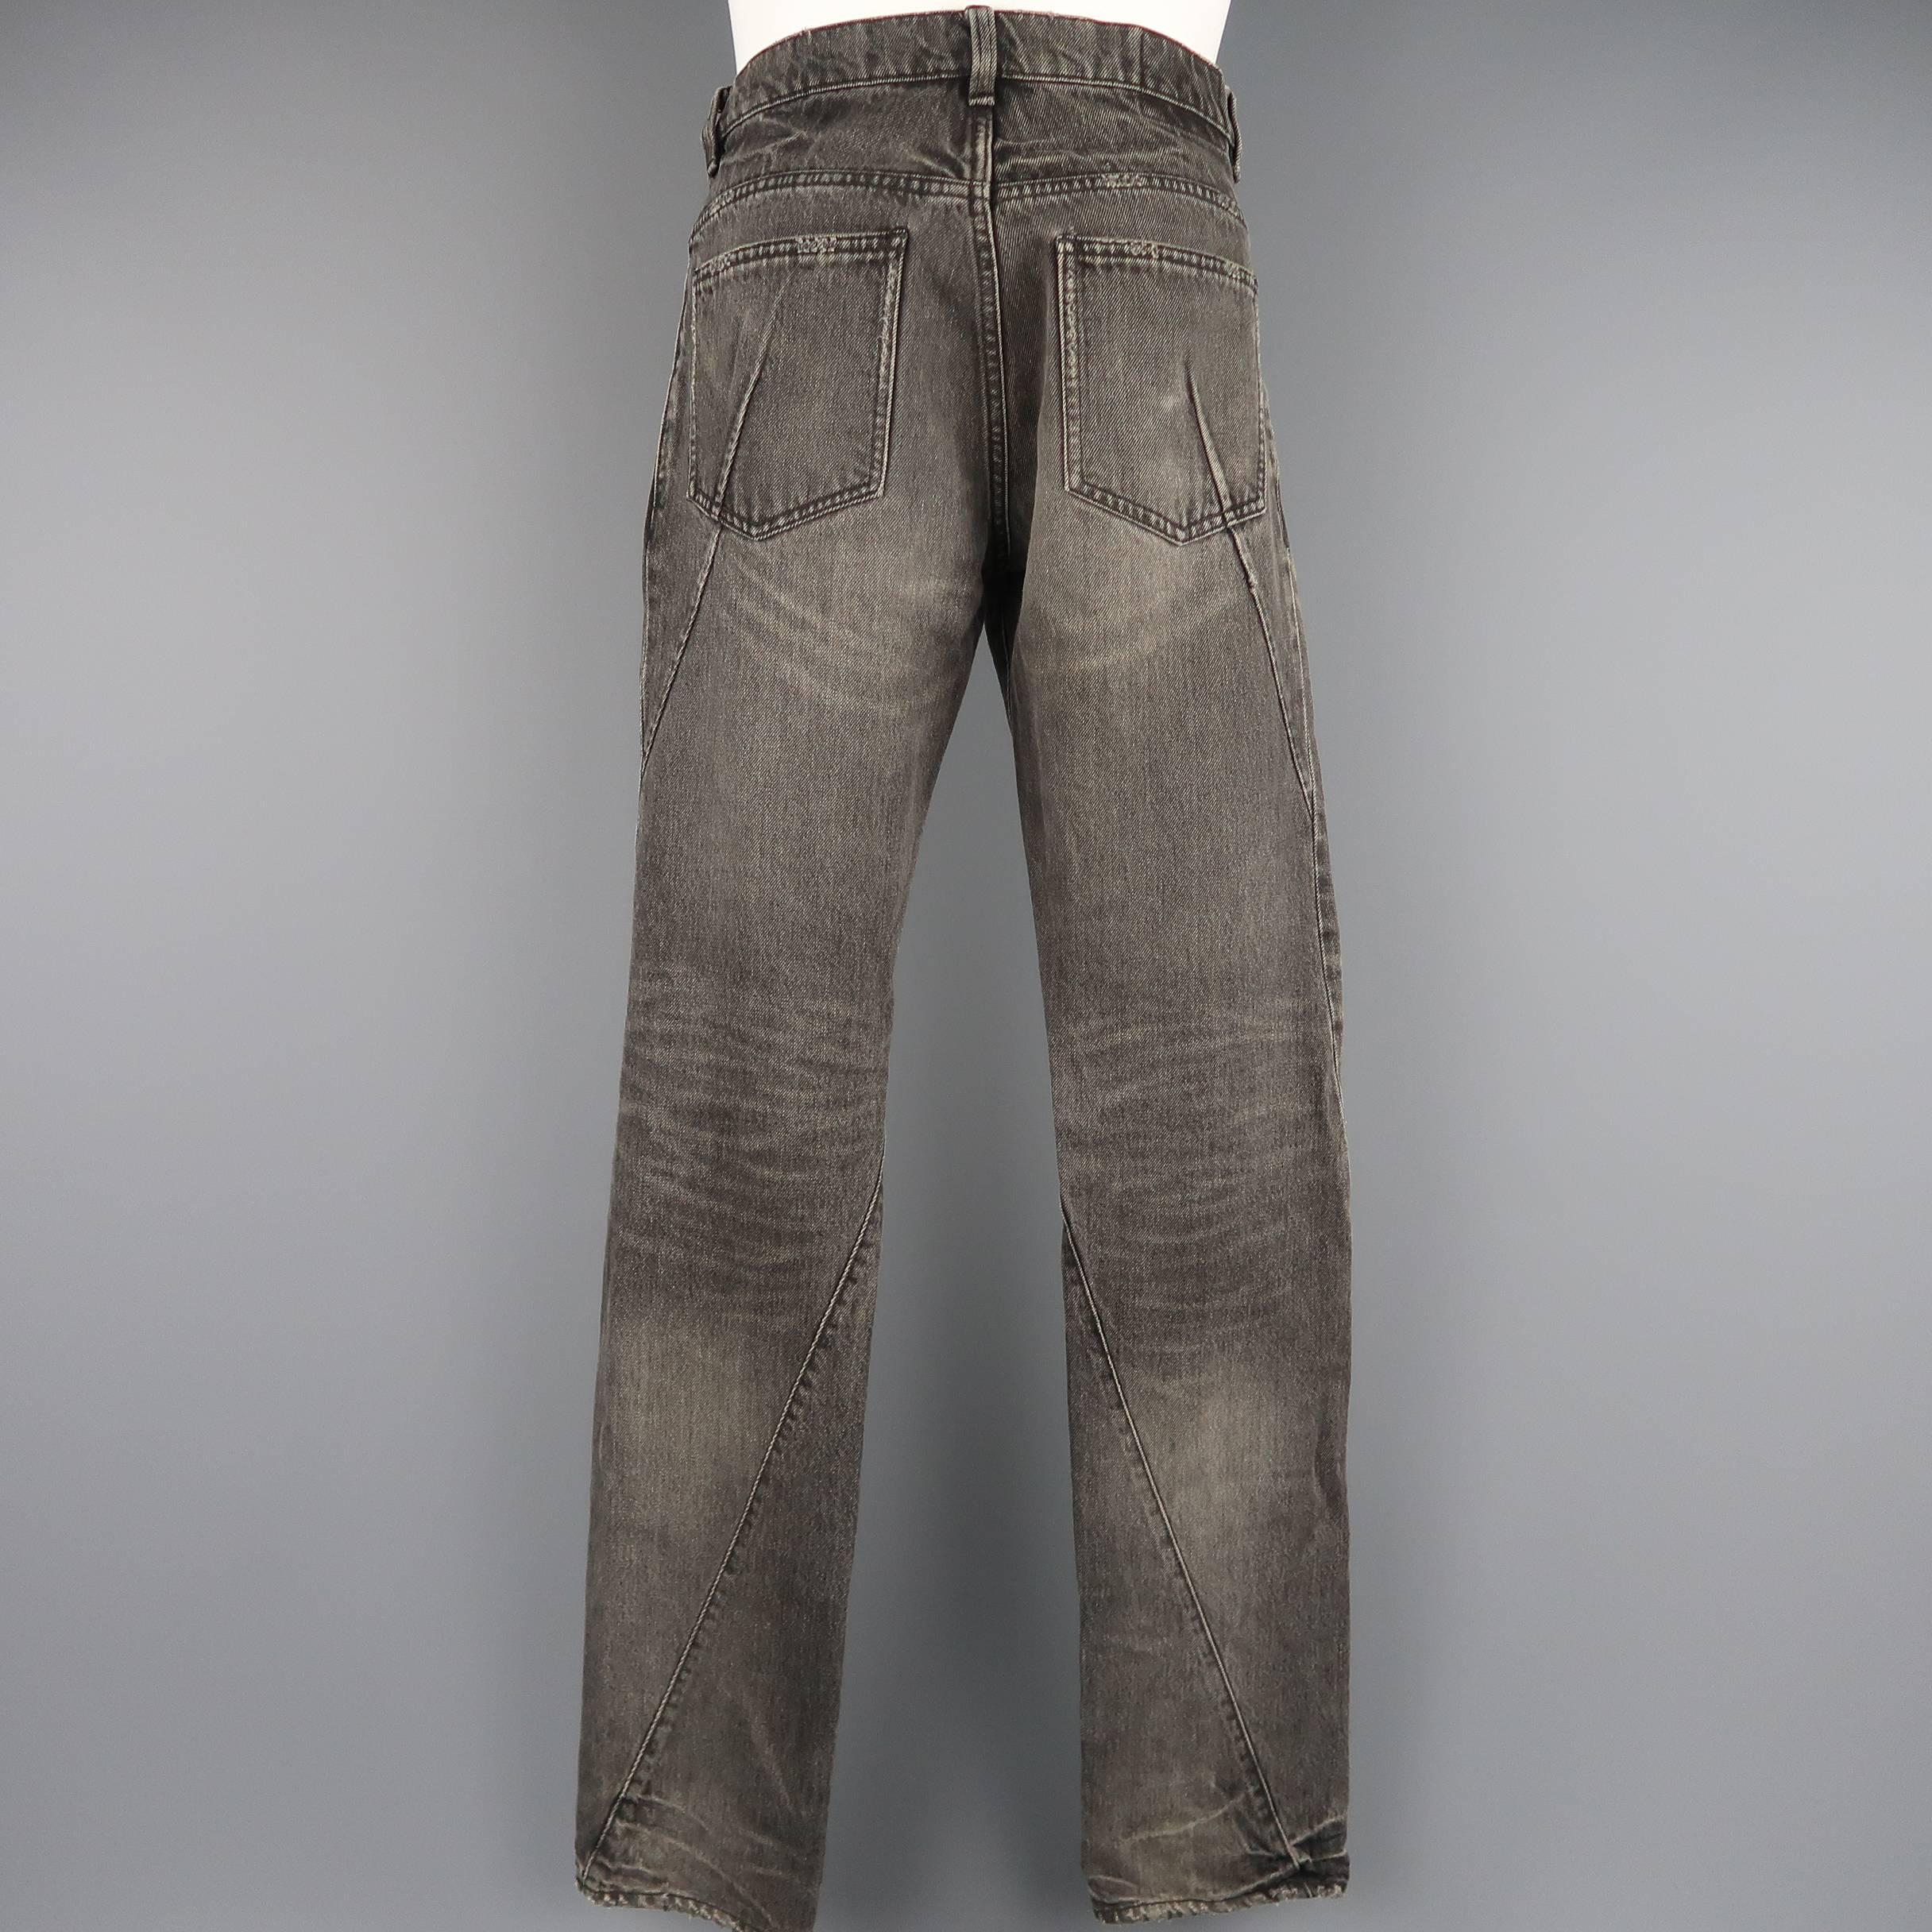 Black Men's ATTACHMENT Size 32 Charcoal Distressed Washed Denim Diagonal Seam Jeans